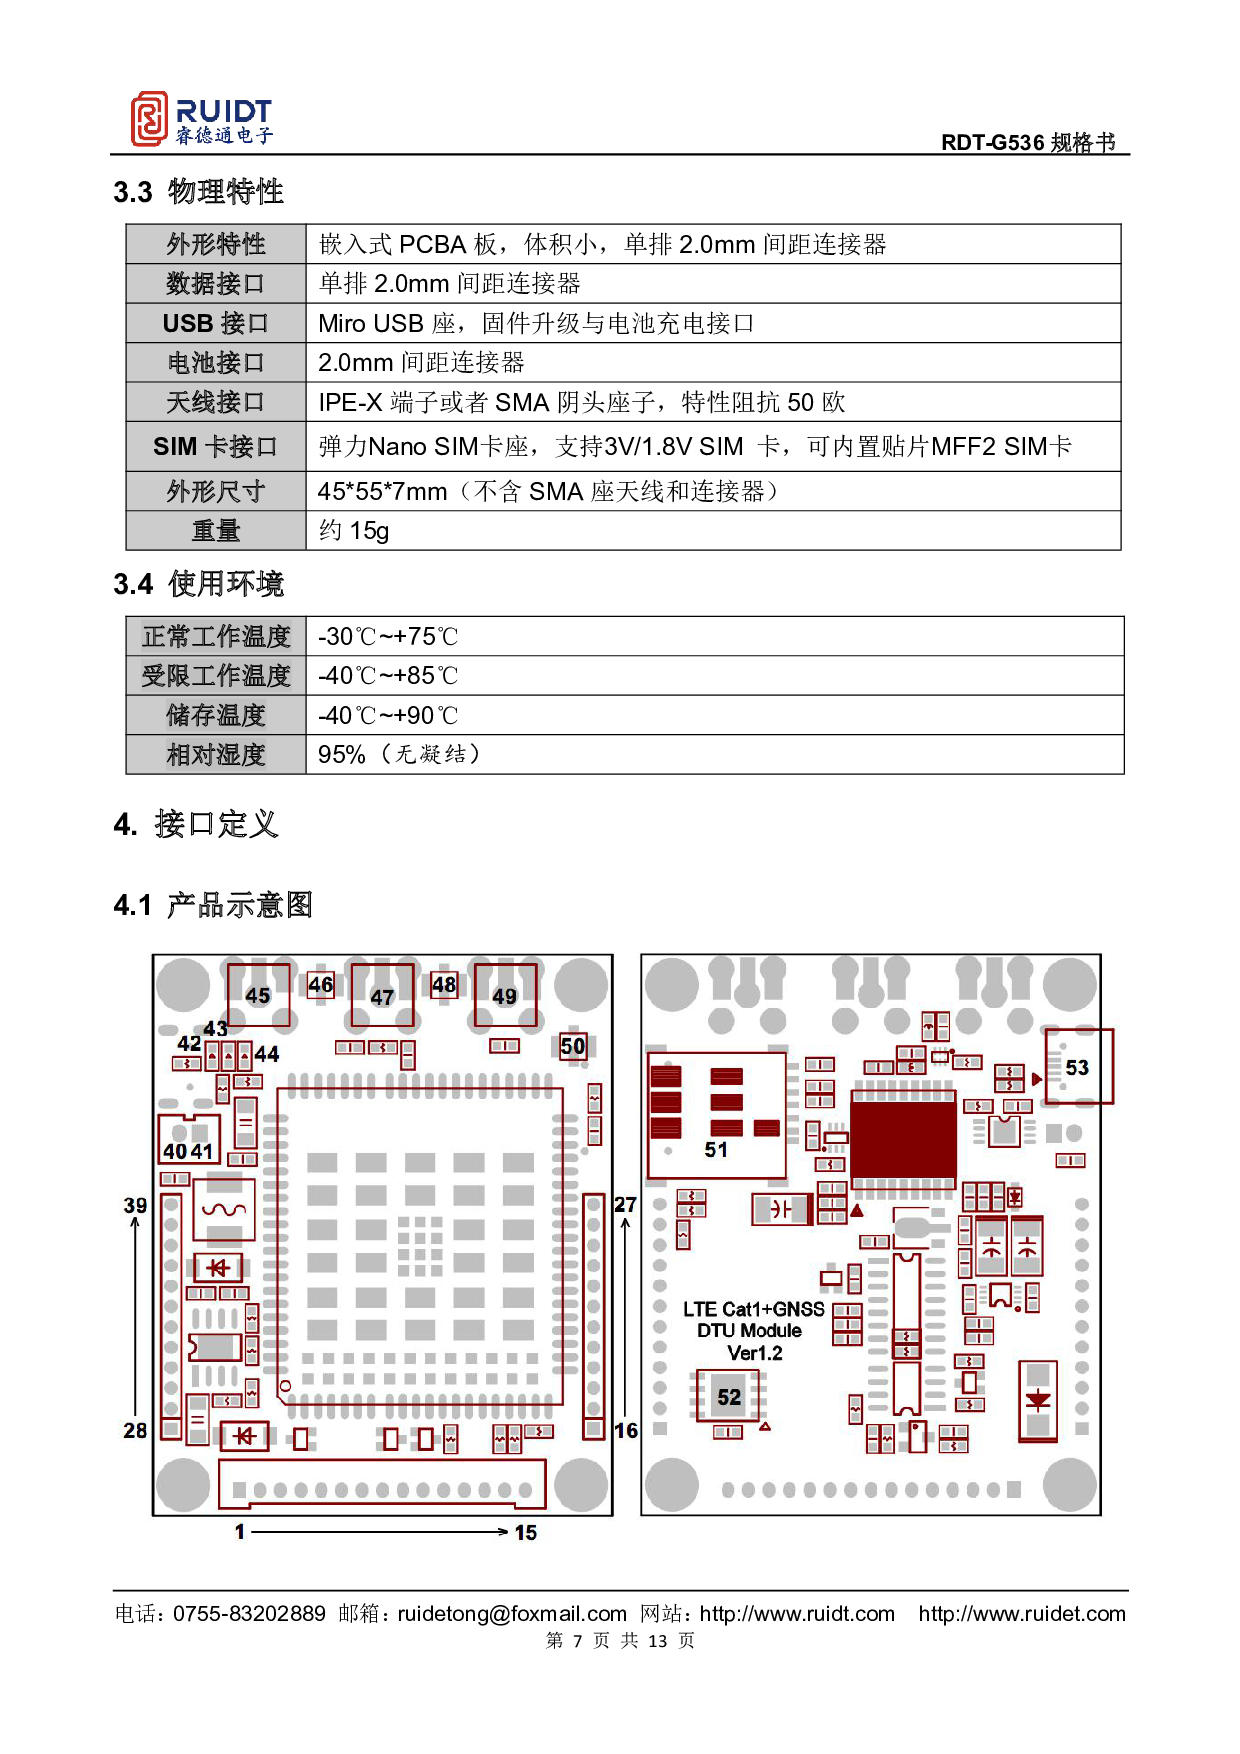 RDT-G536嵌入式Cat1 DTU模块图片